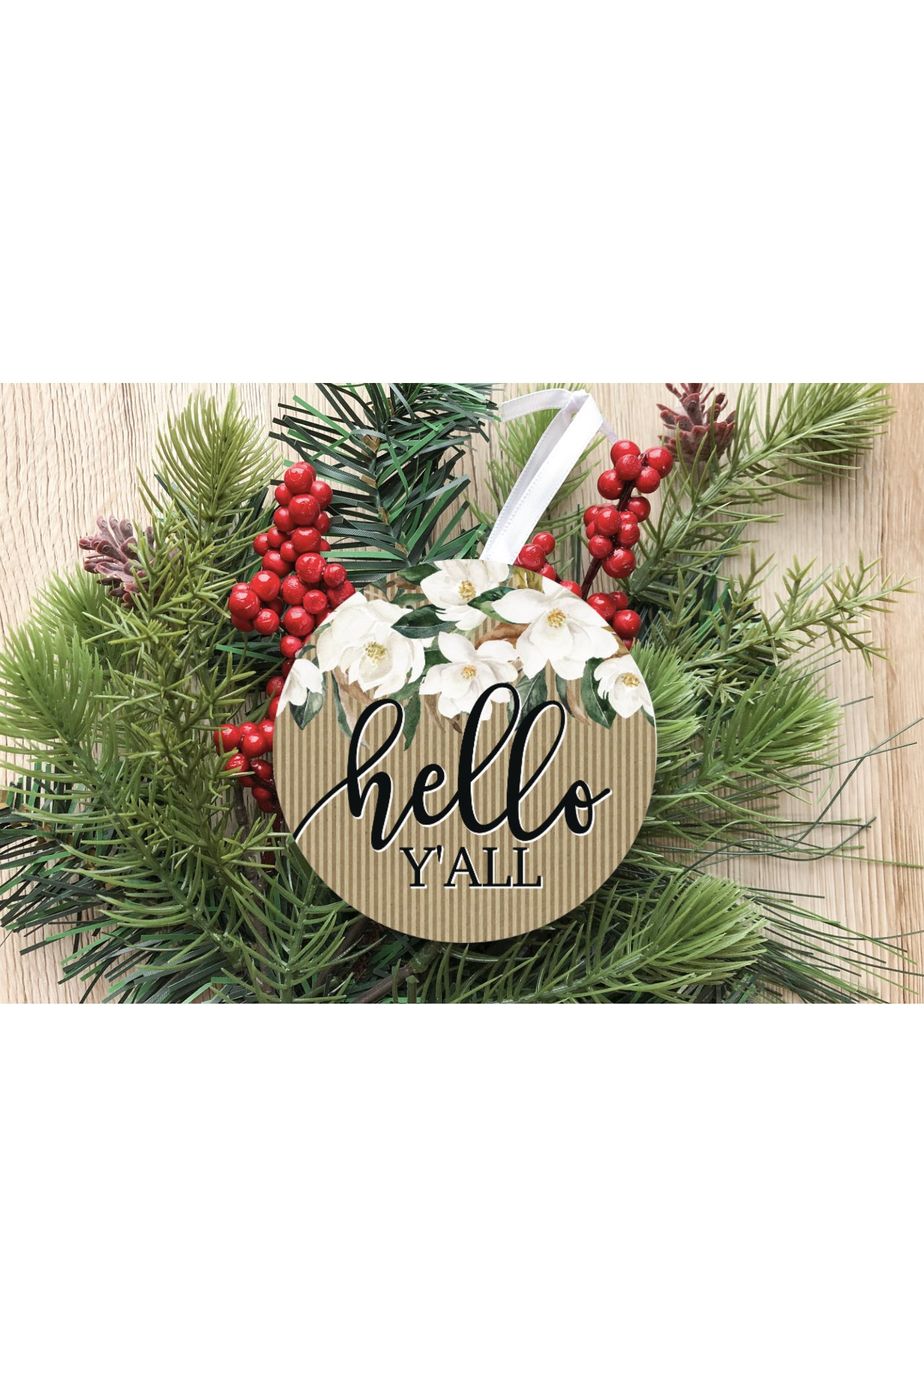 Shop For Magnolia Hello Yall Sign - Wreath Enhancement